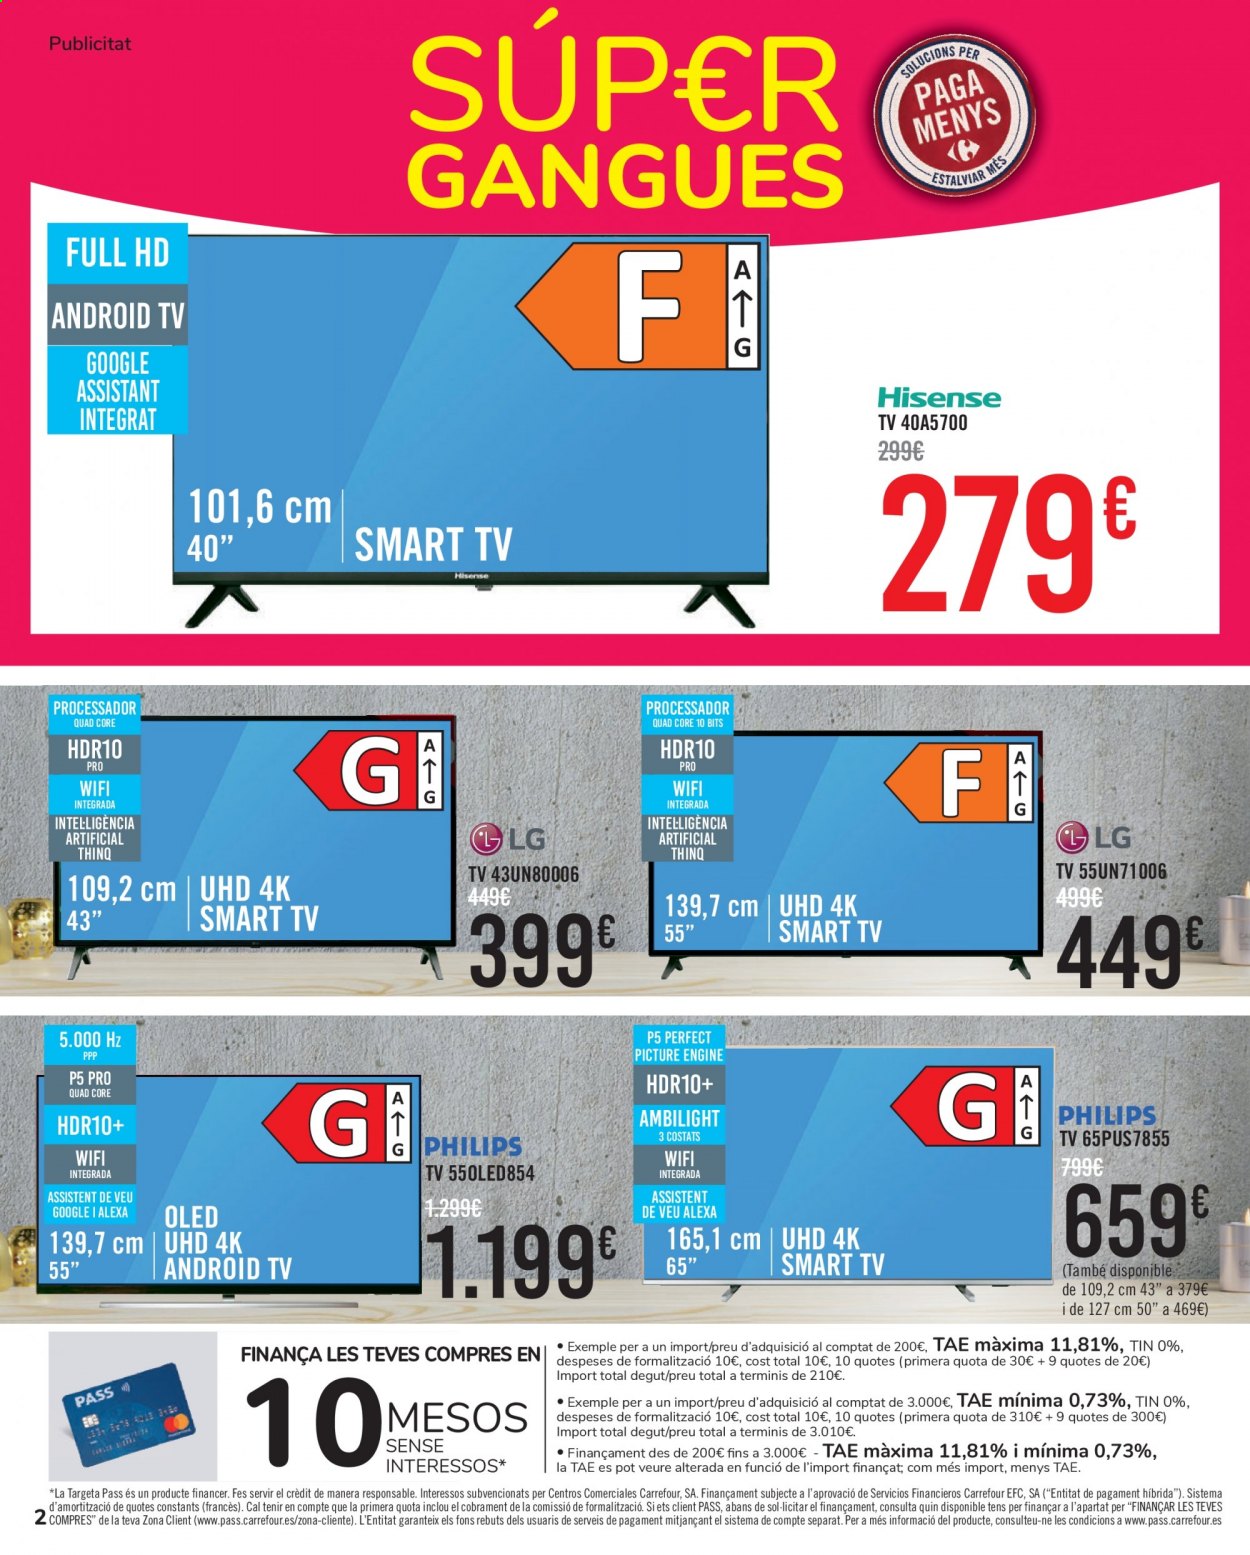 thumbnail - Folleto actual Carrefour - 16/04/21 - 26/04/21 - Ventas - LG, Philips, Hisense, Smart TV, televisor. Página 2.